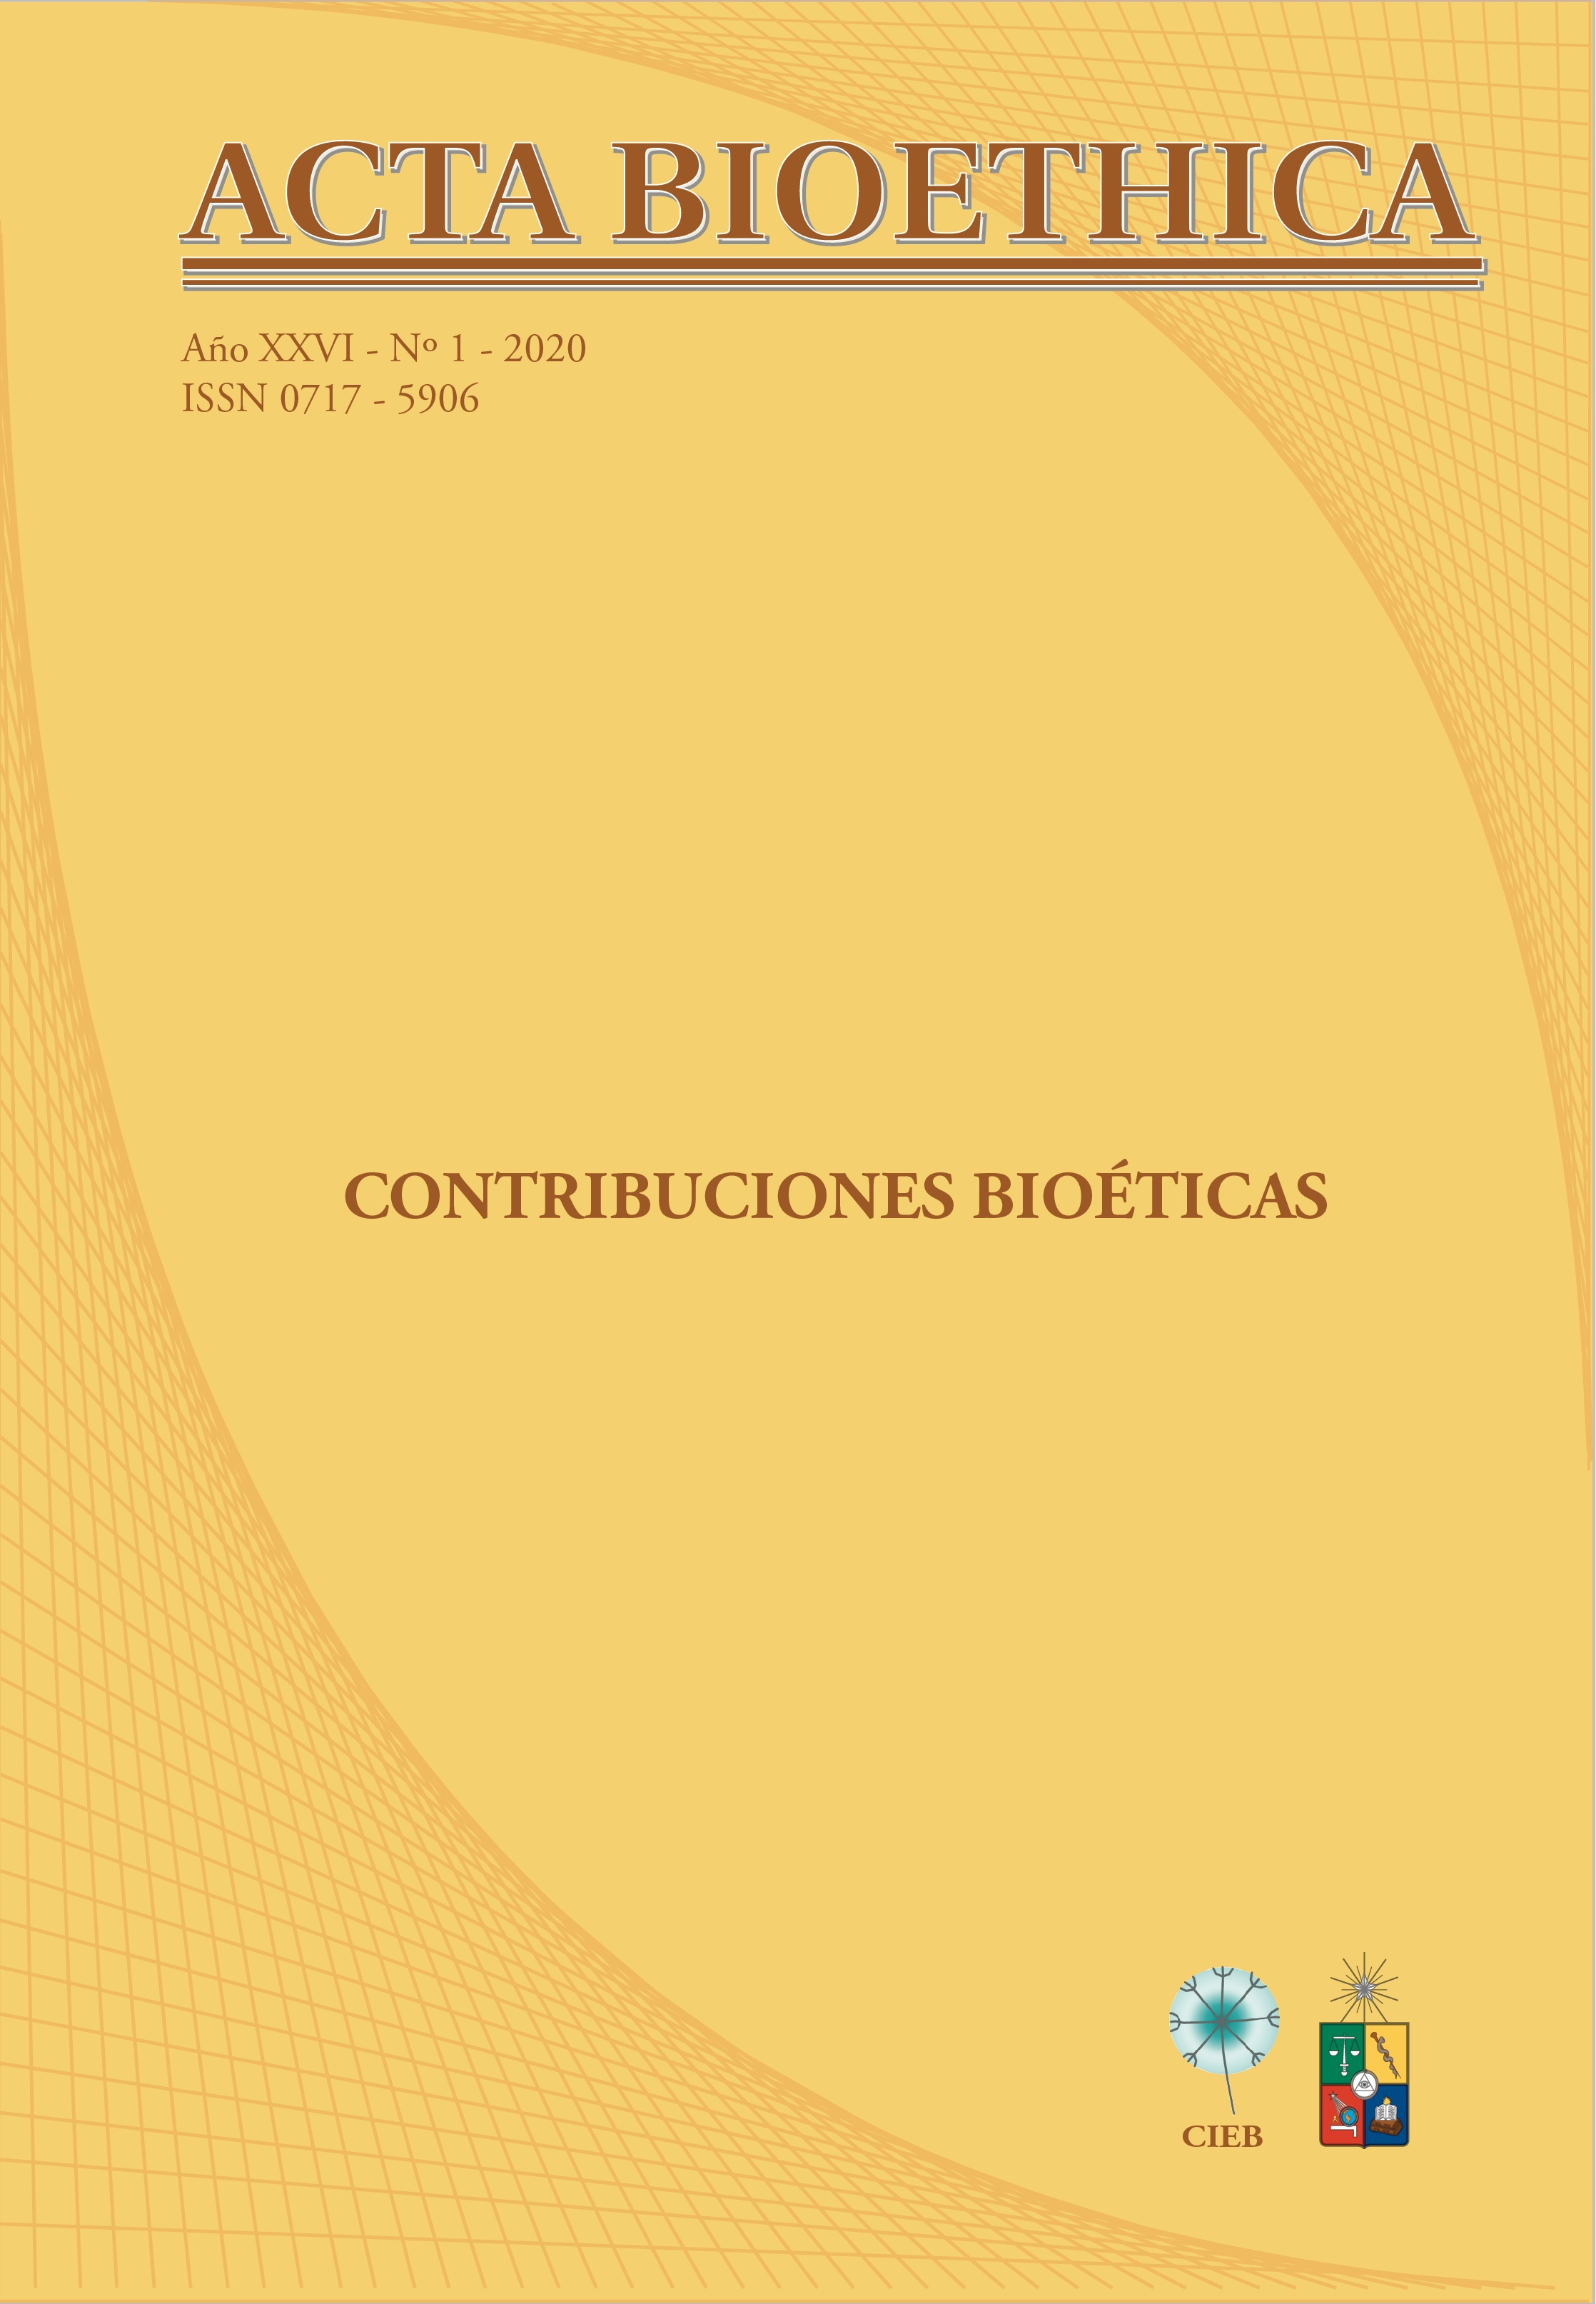 											Ver Vol. 26 Núm. 1 (2020): Contribuciones bioéticas
										